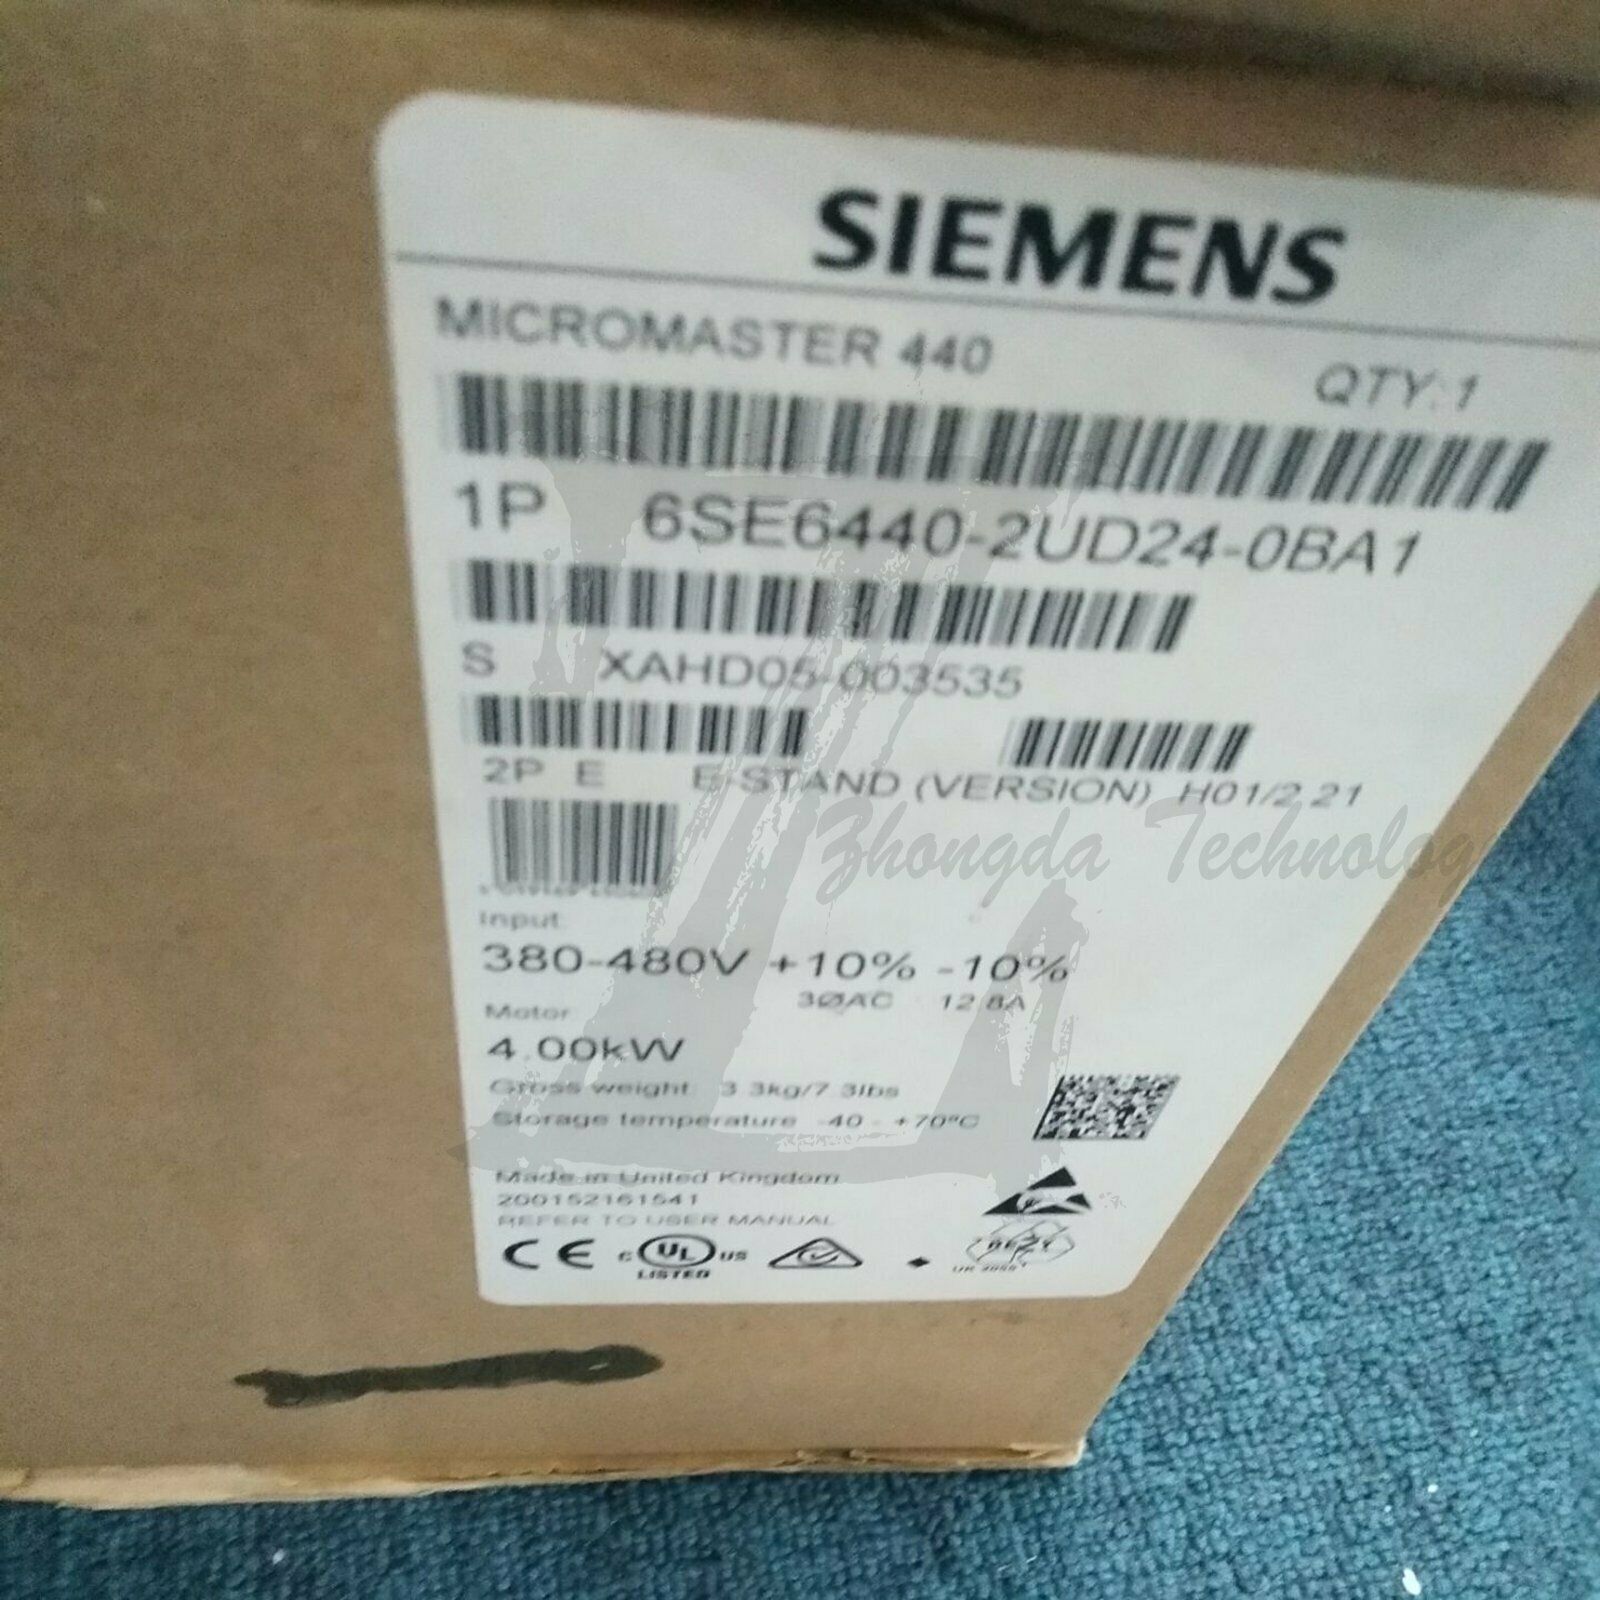 New Siemens MM440 frequency converter 4KW 6SE6440-2UD24-0BA1